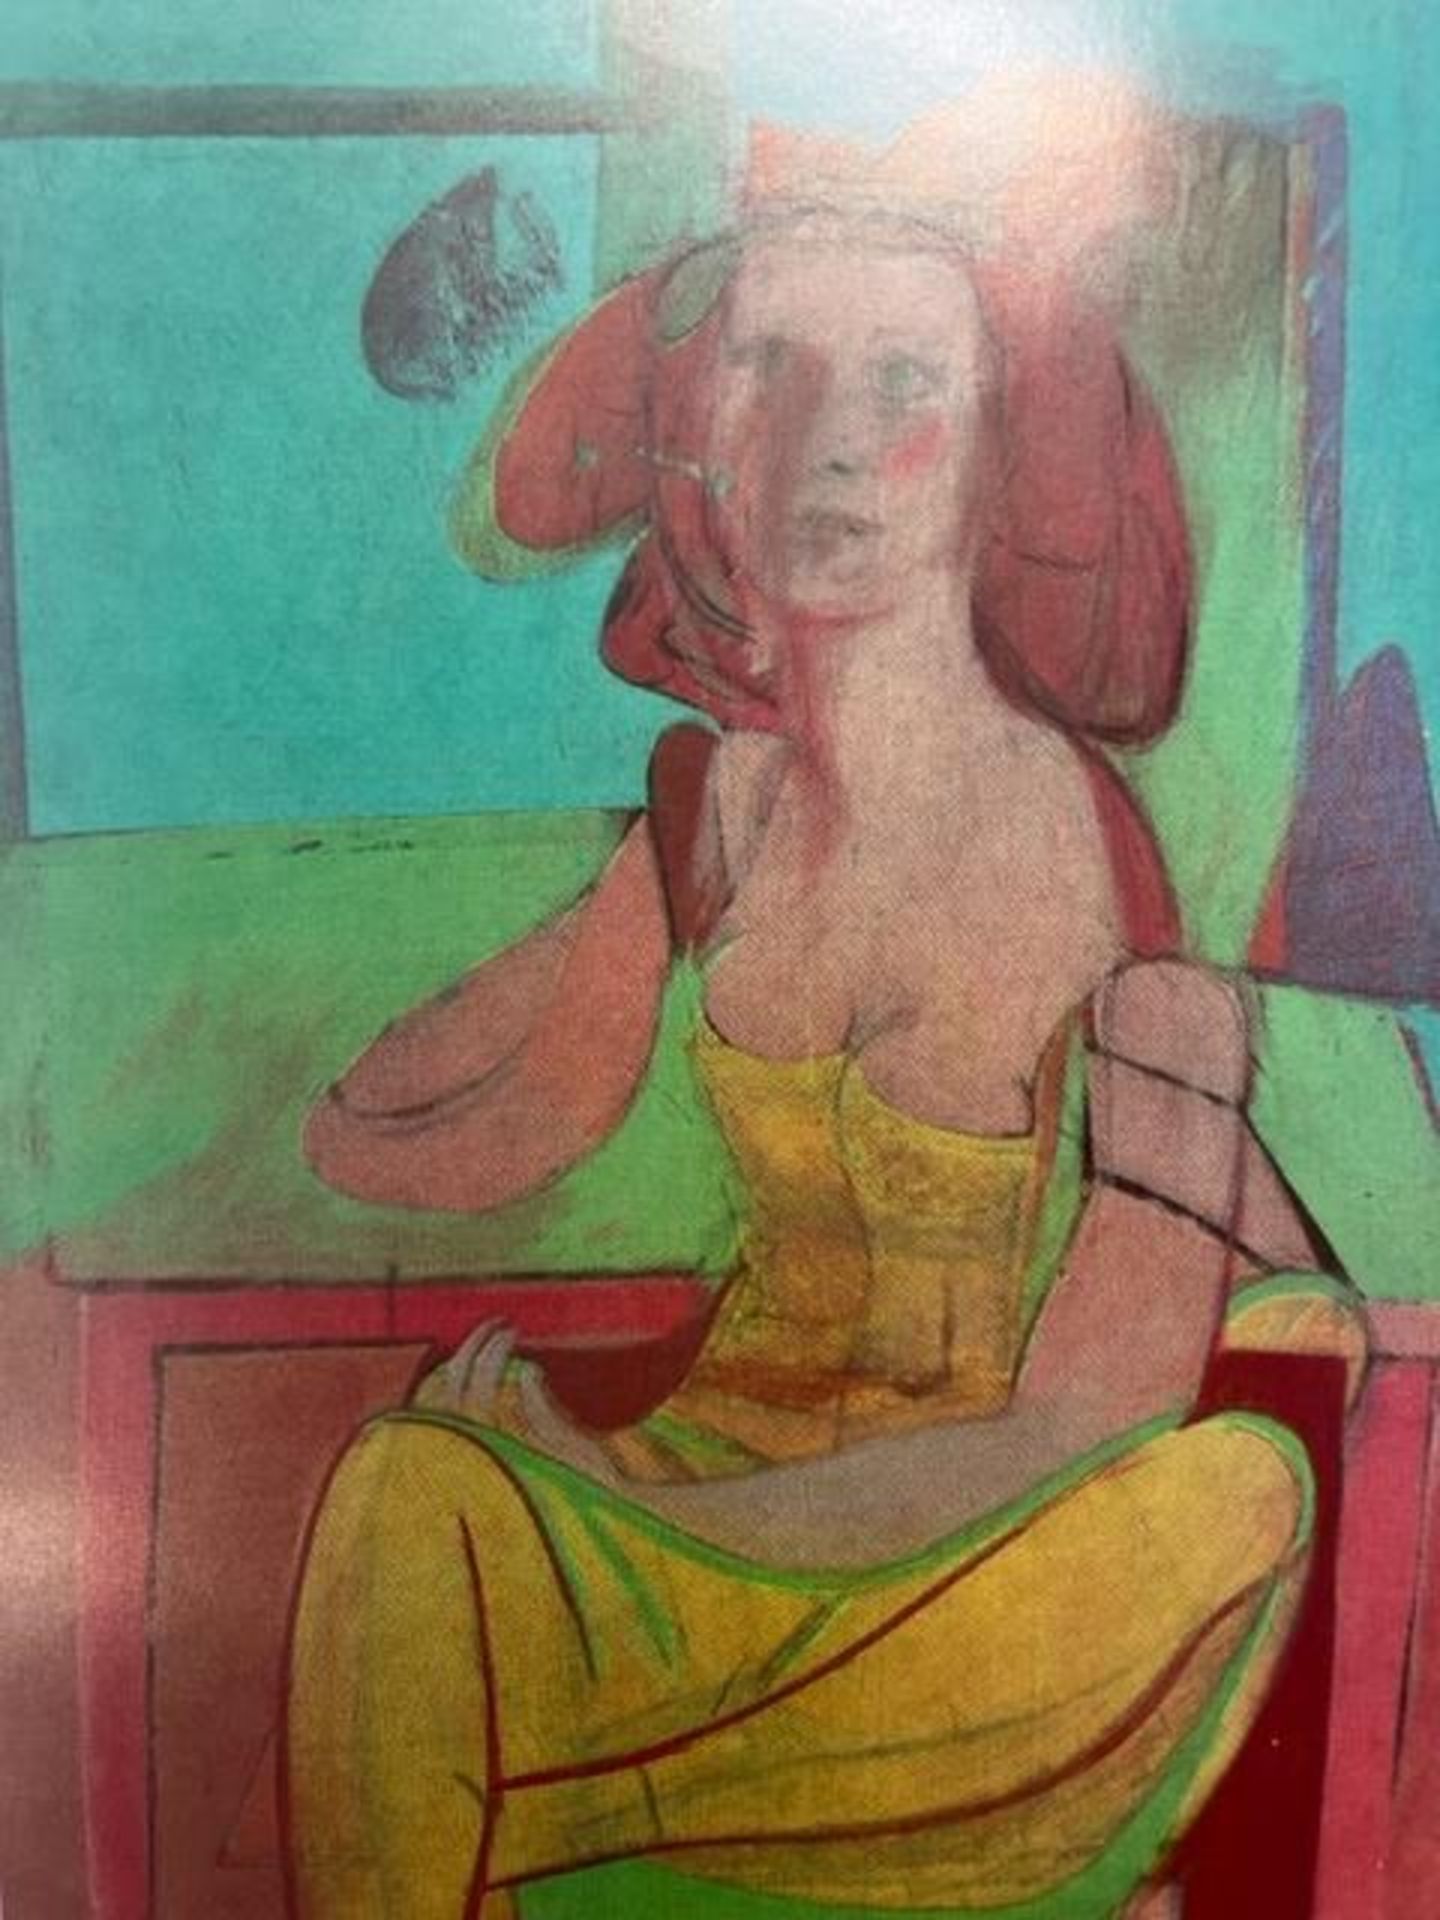 Willem de Kooning "Seated Woman" Print.